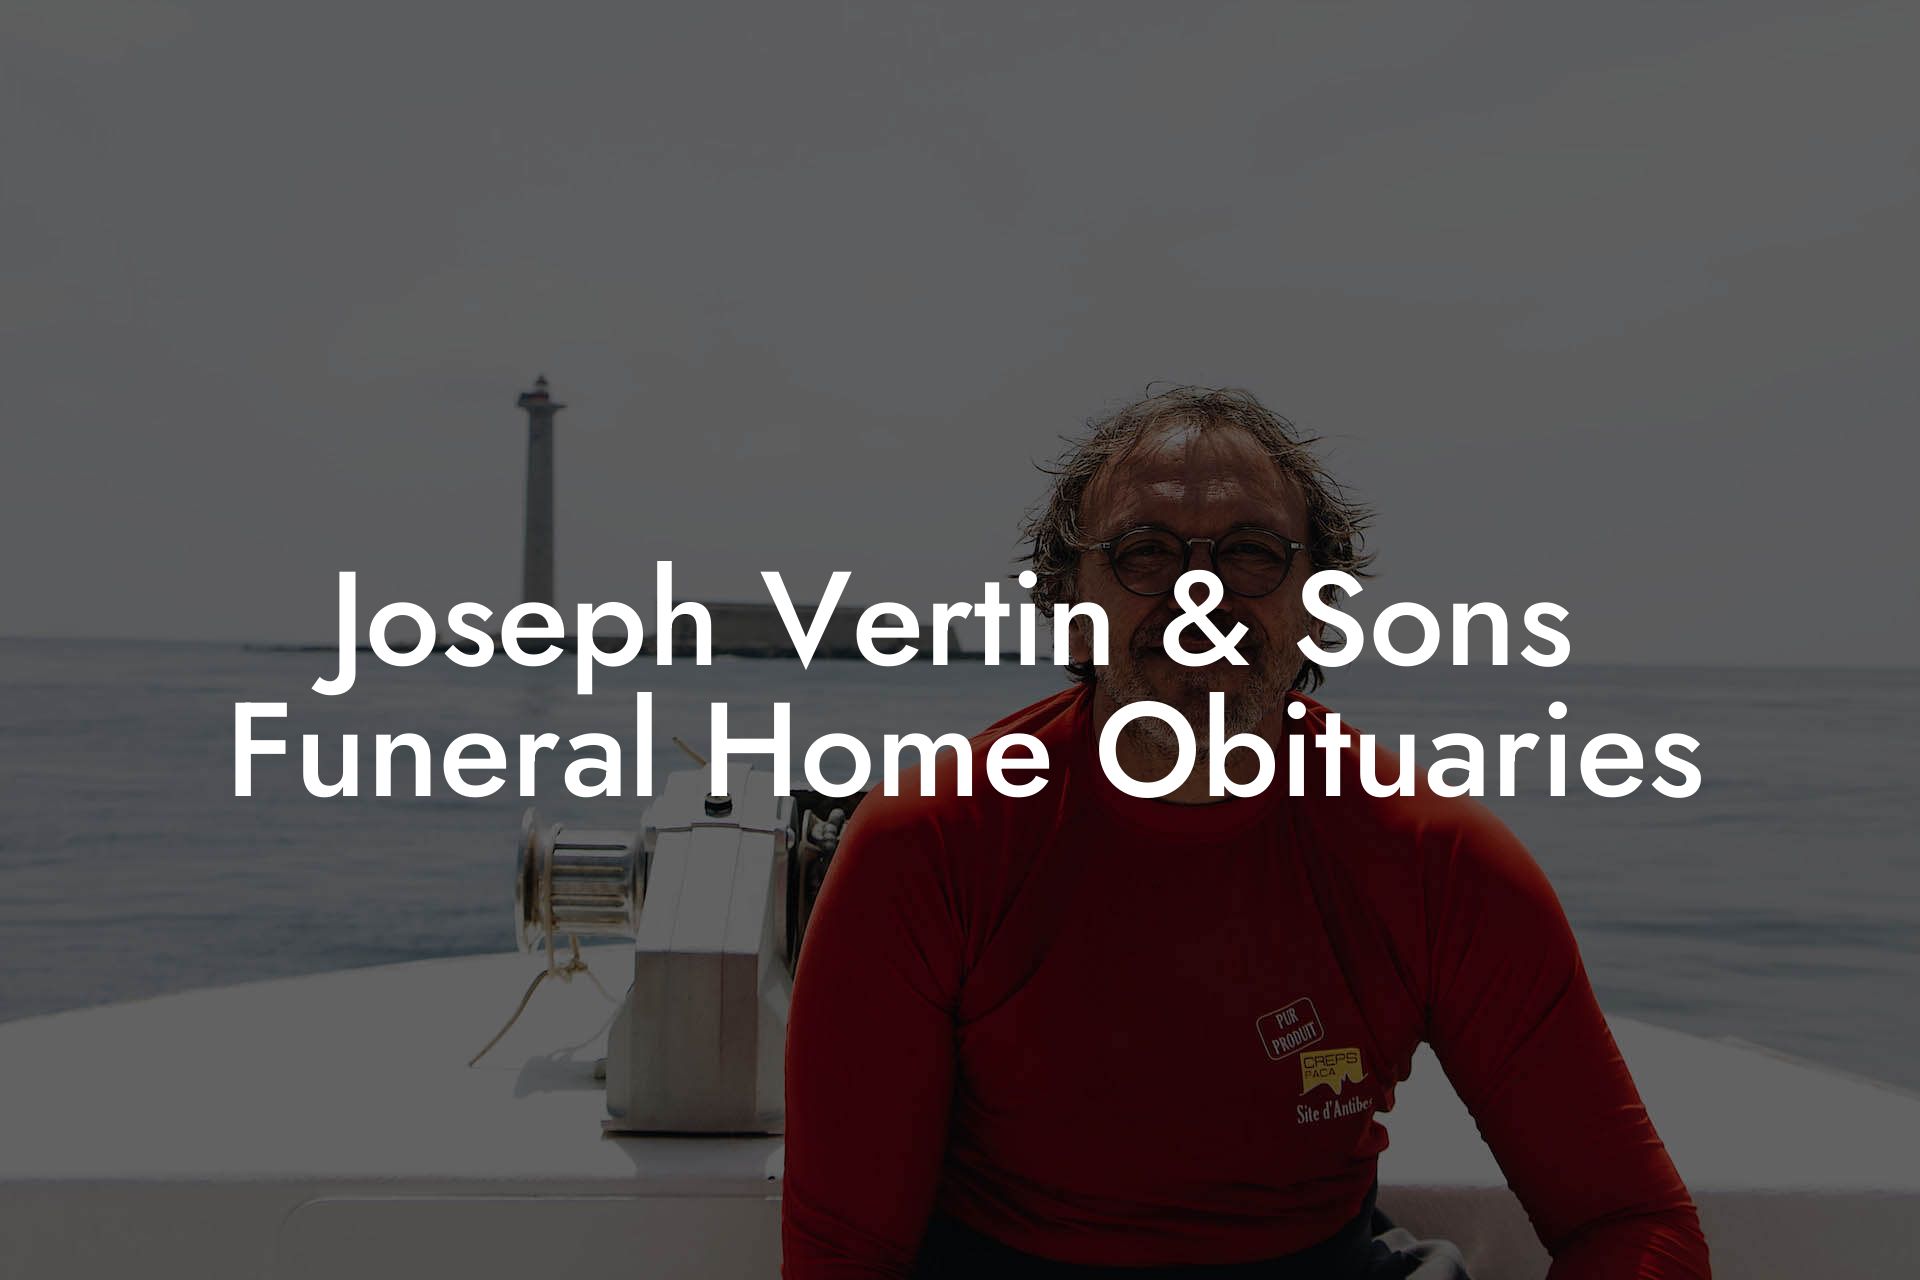 Joseph Vertin & Sons Funeral Home Obituaries